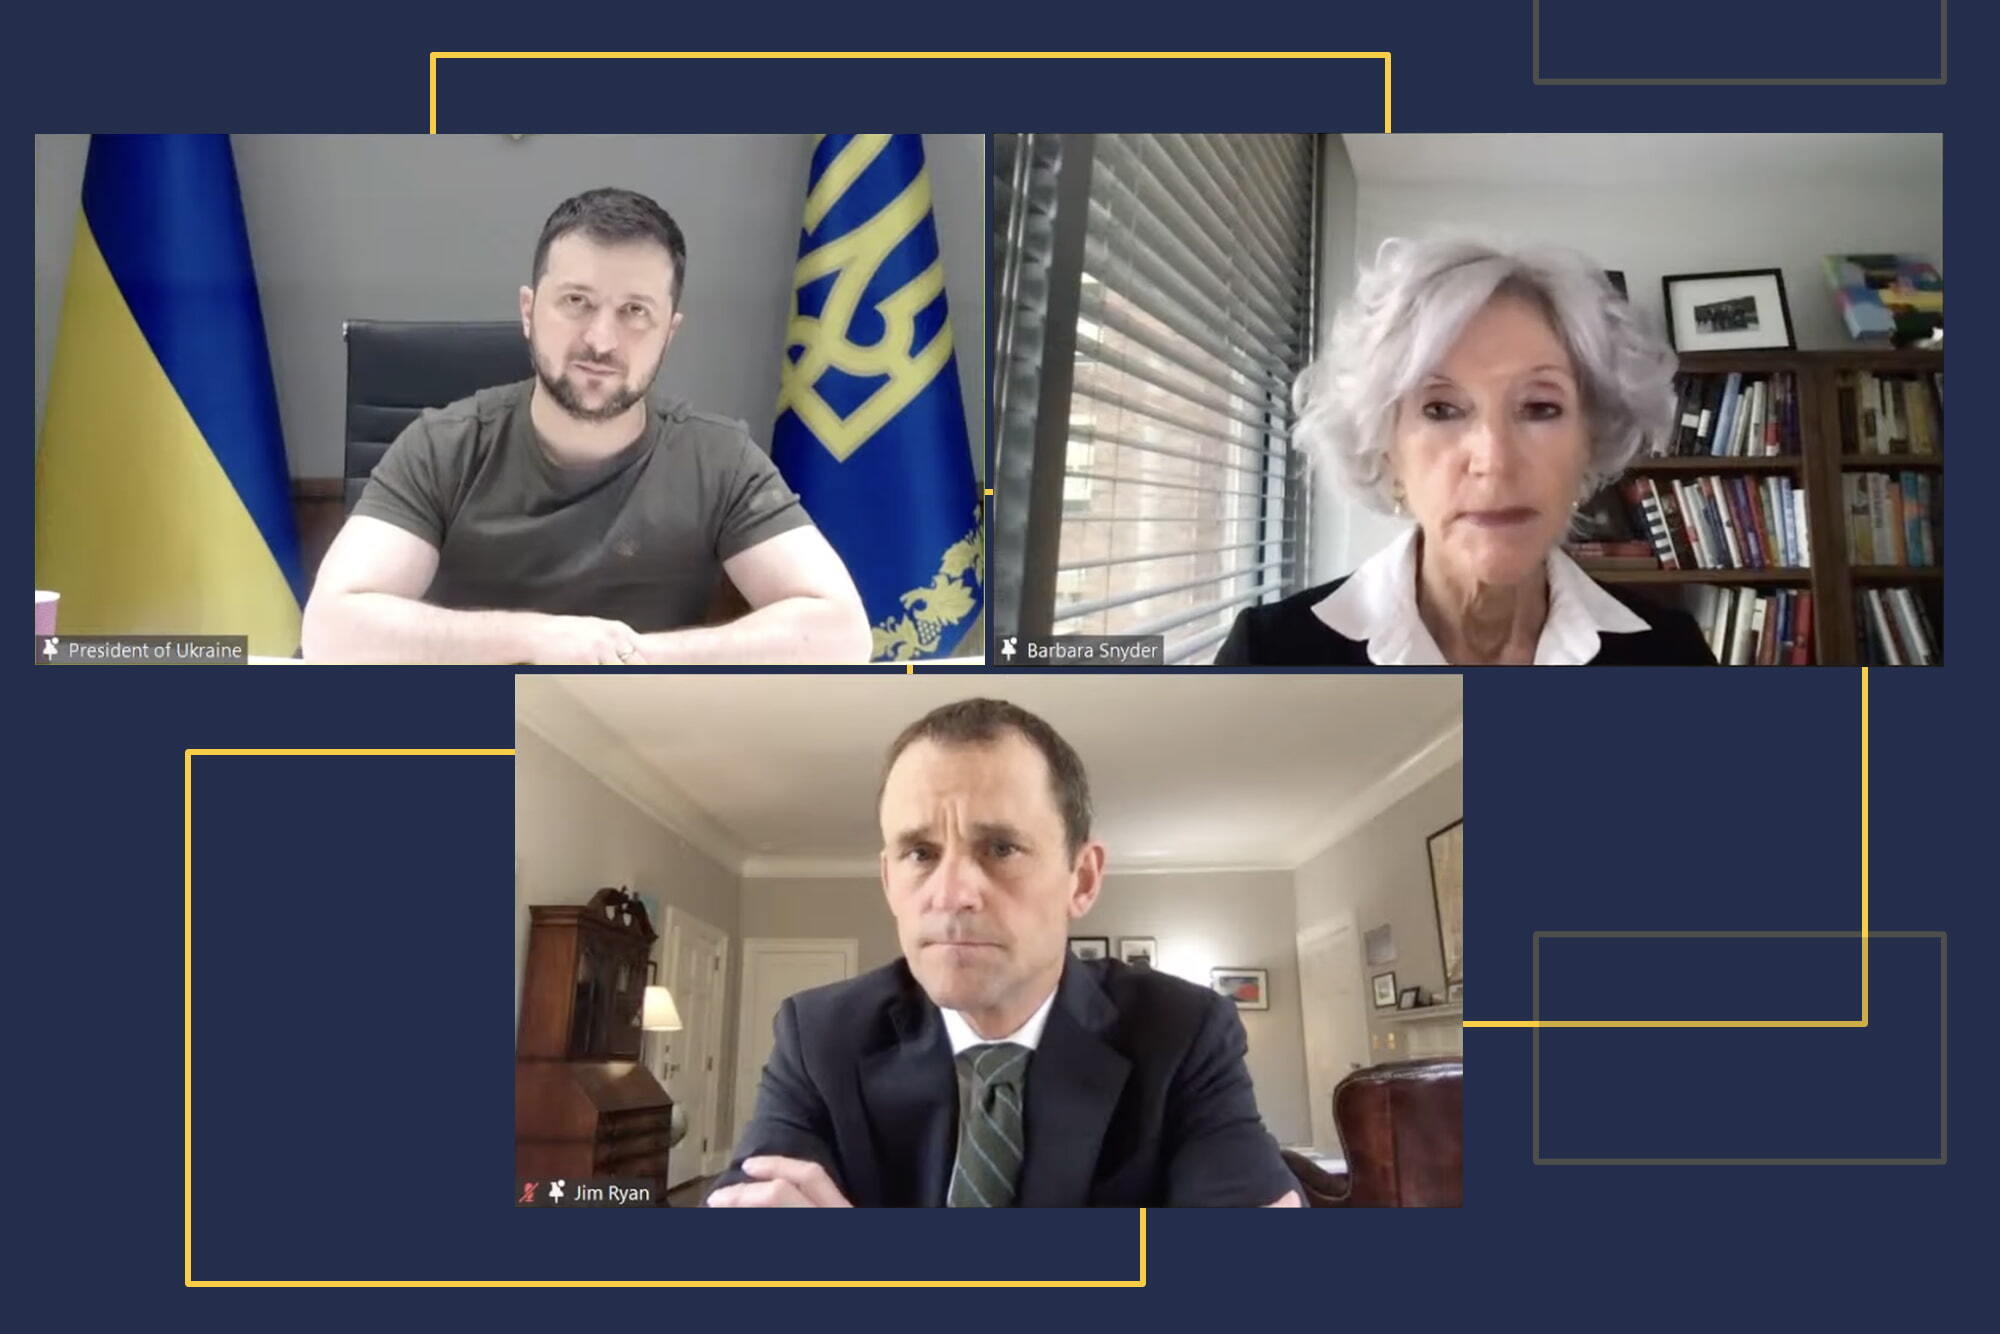 Screenshot of Livestream featuring Ukraine President Volodymyr Zelenskyy, UVA President Jim Ryan and Association of American Universities President Barbara Snyder.